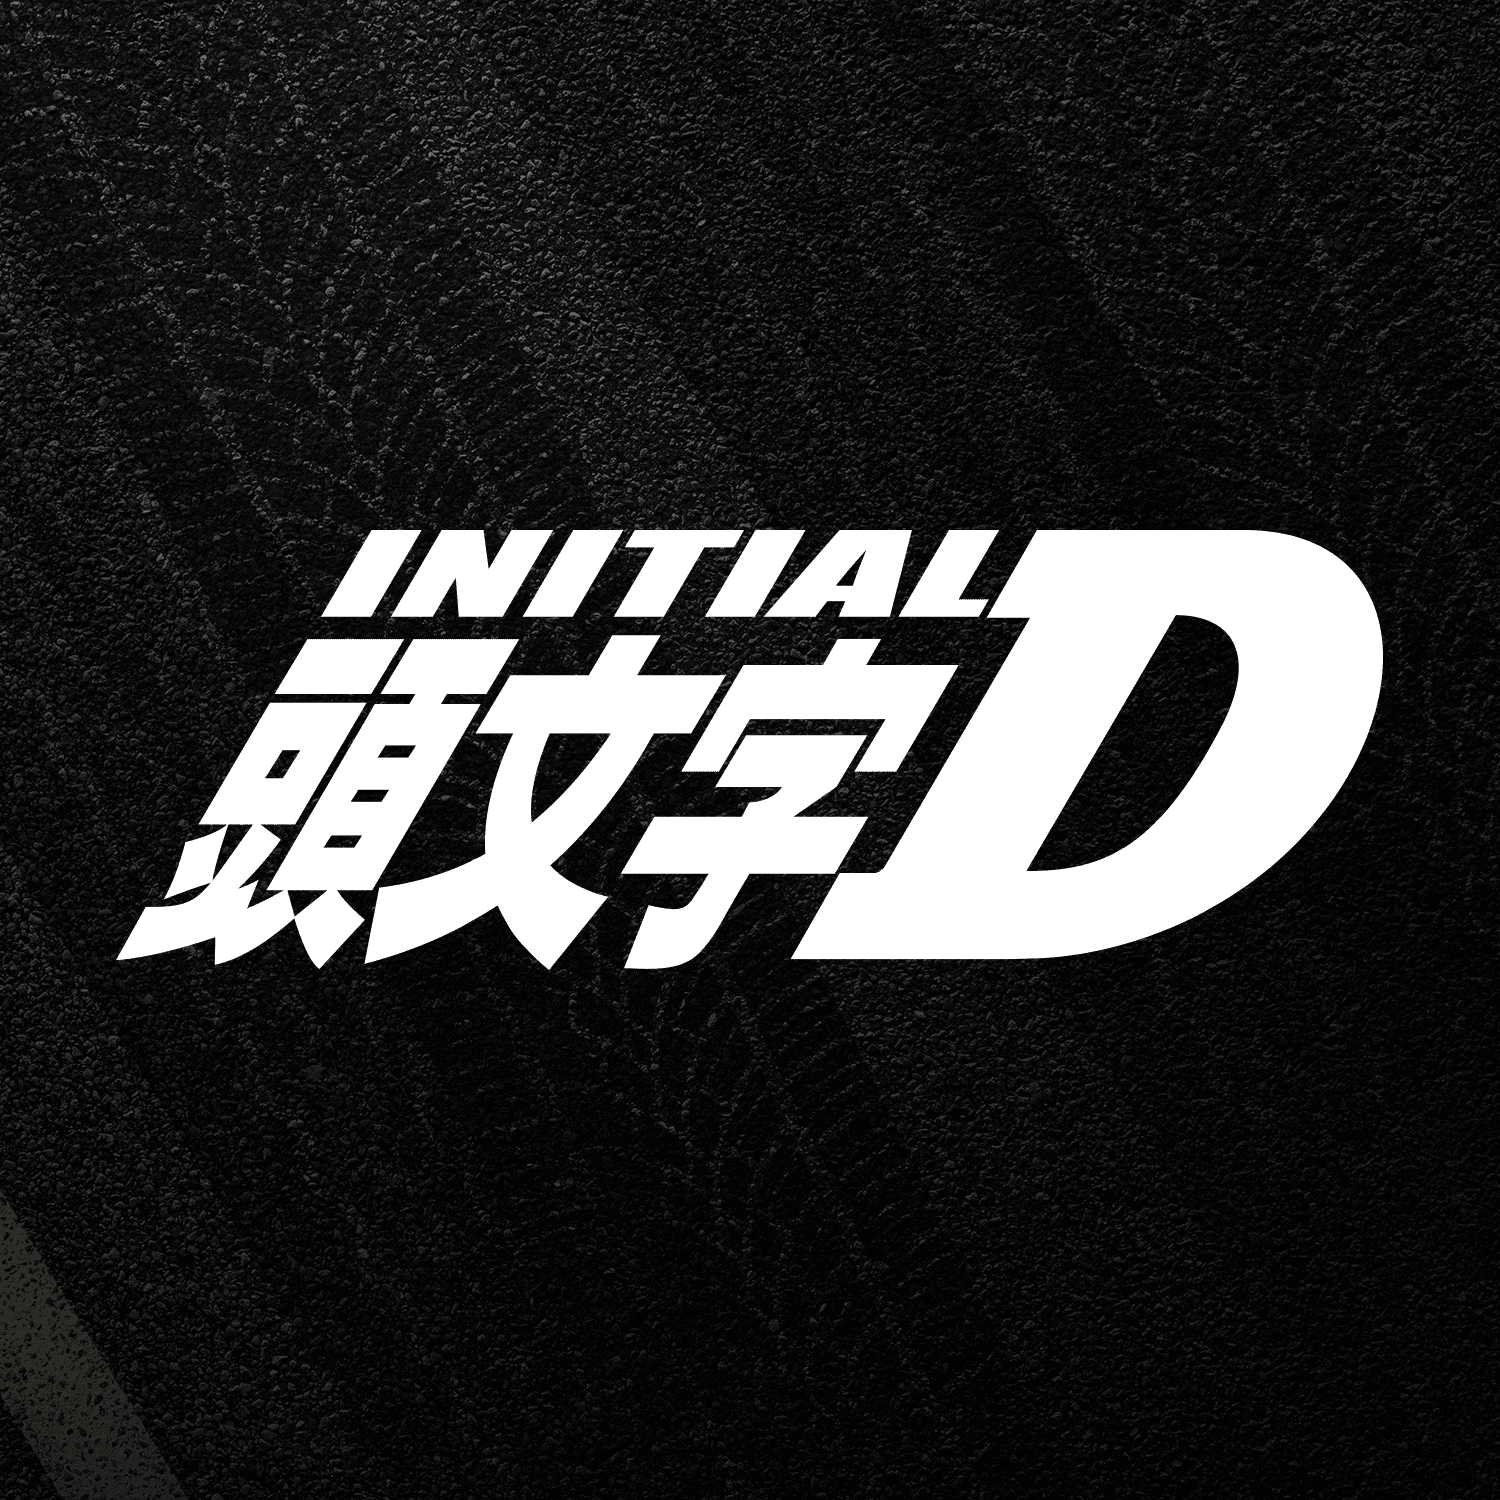 Black D Logo - INITIAL D Sticker JDM Logo Decal Japanese Decal Drift Car Vinyl | eBay